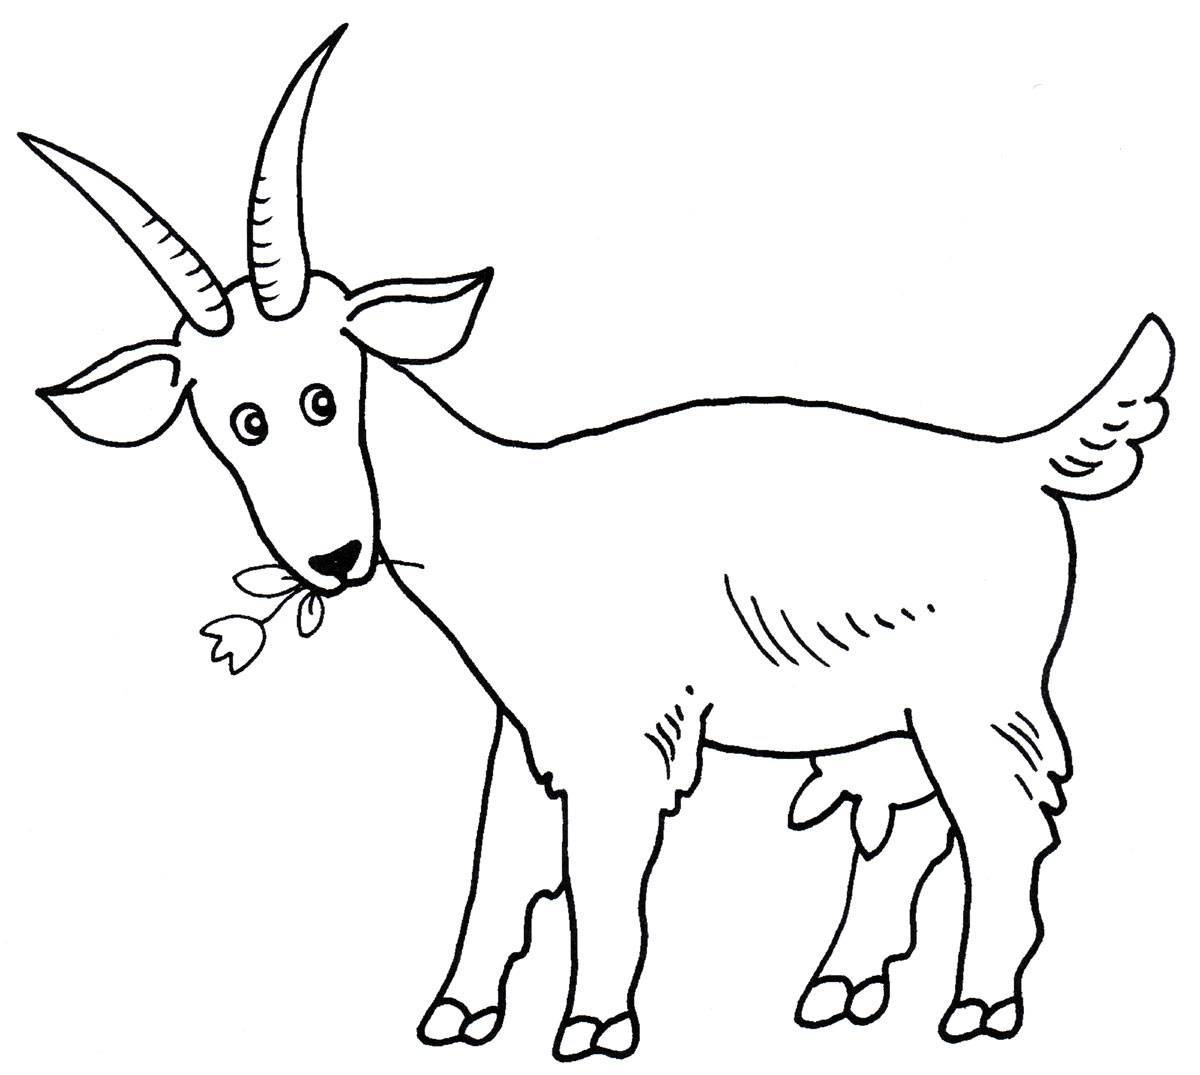 Fun goat coloring book for kids